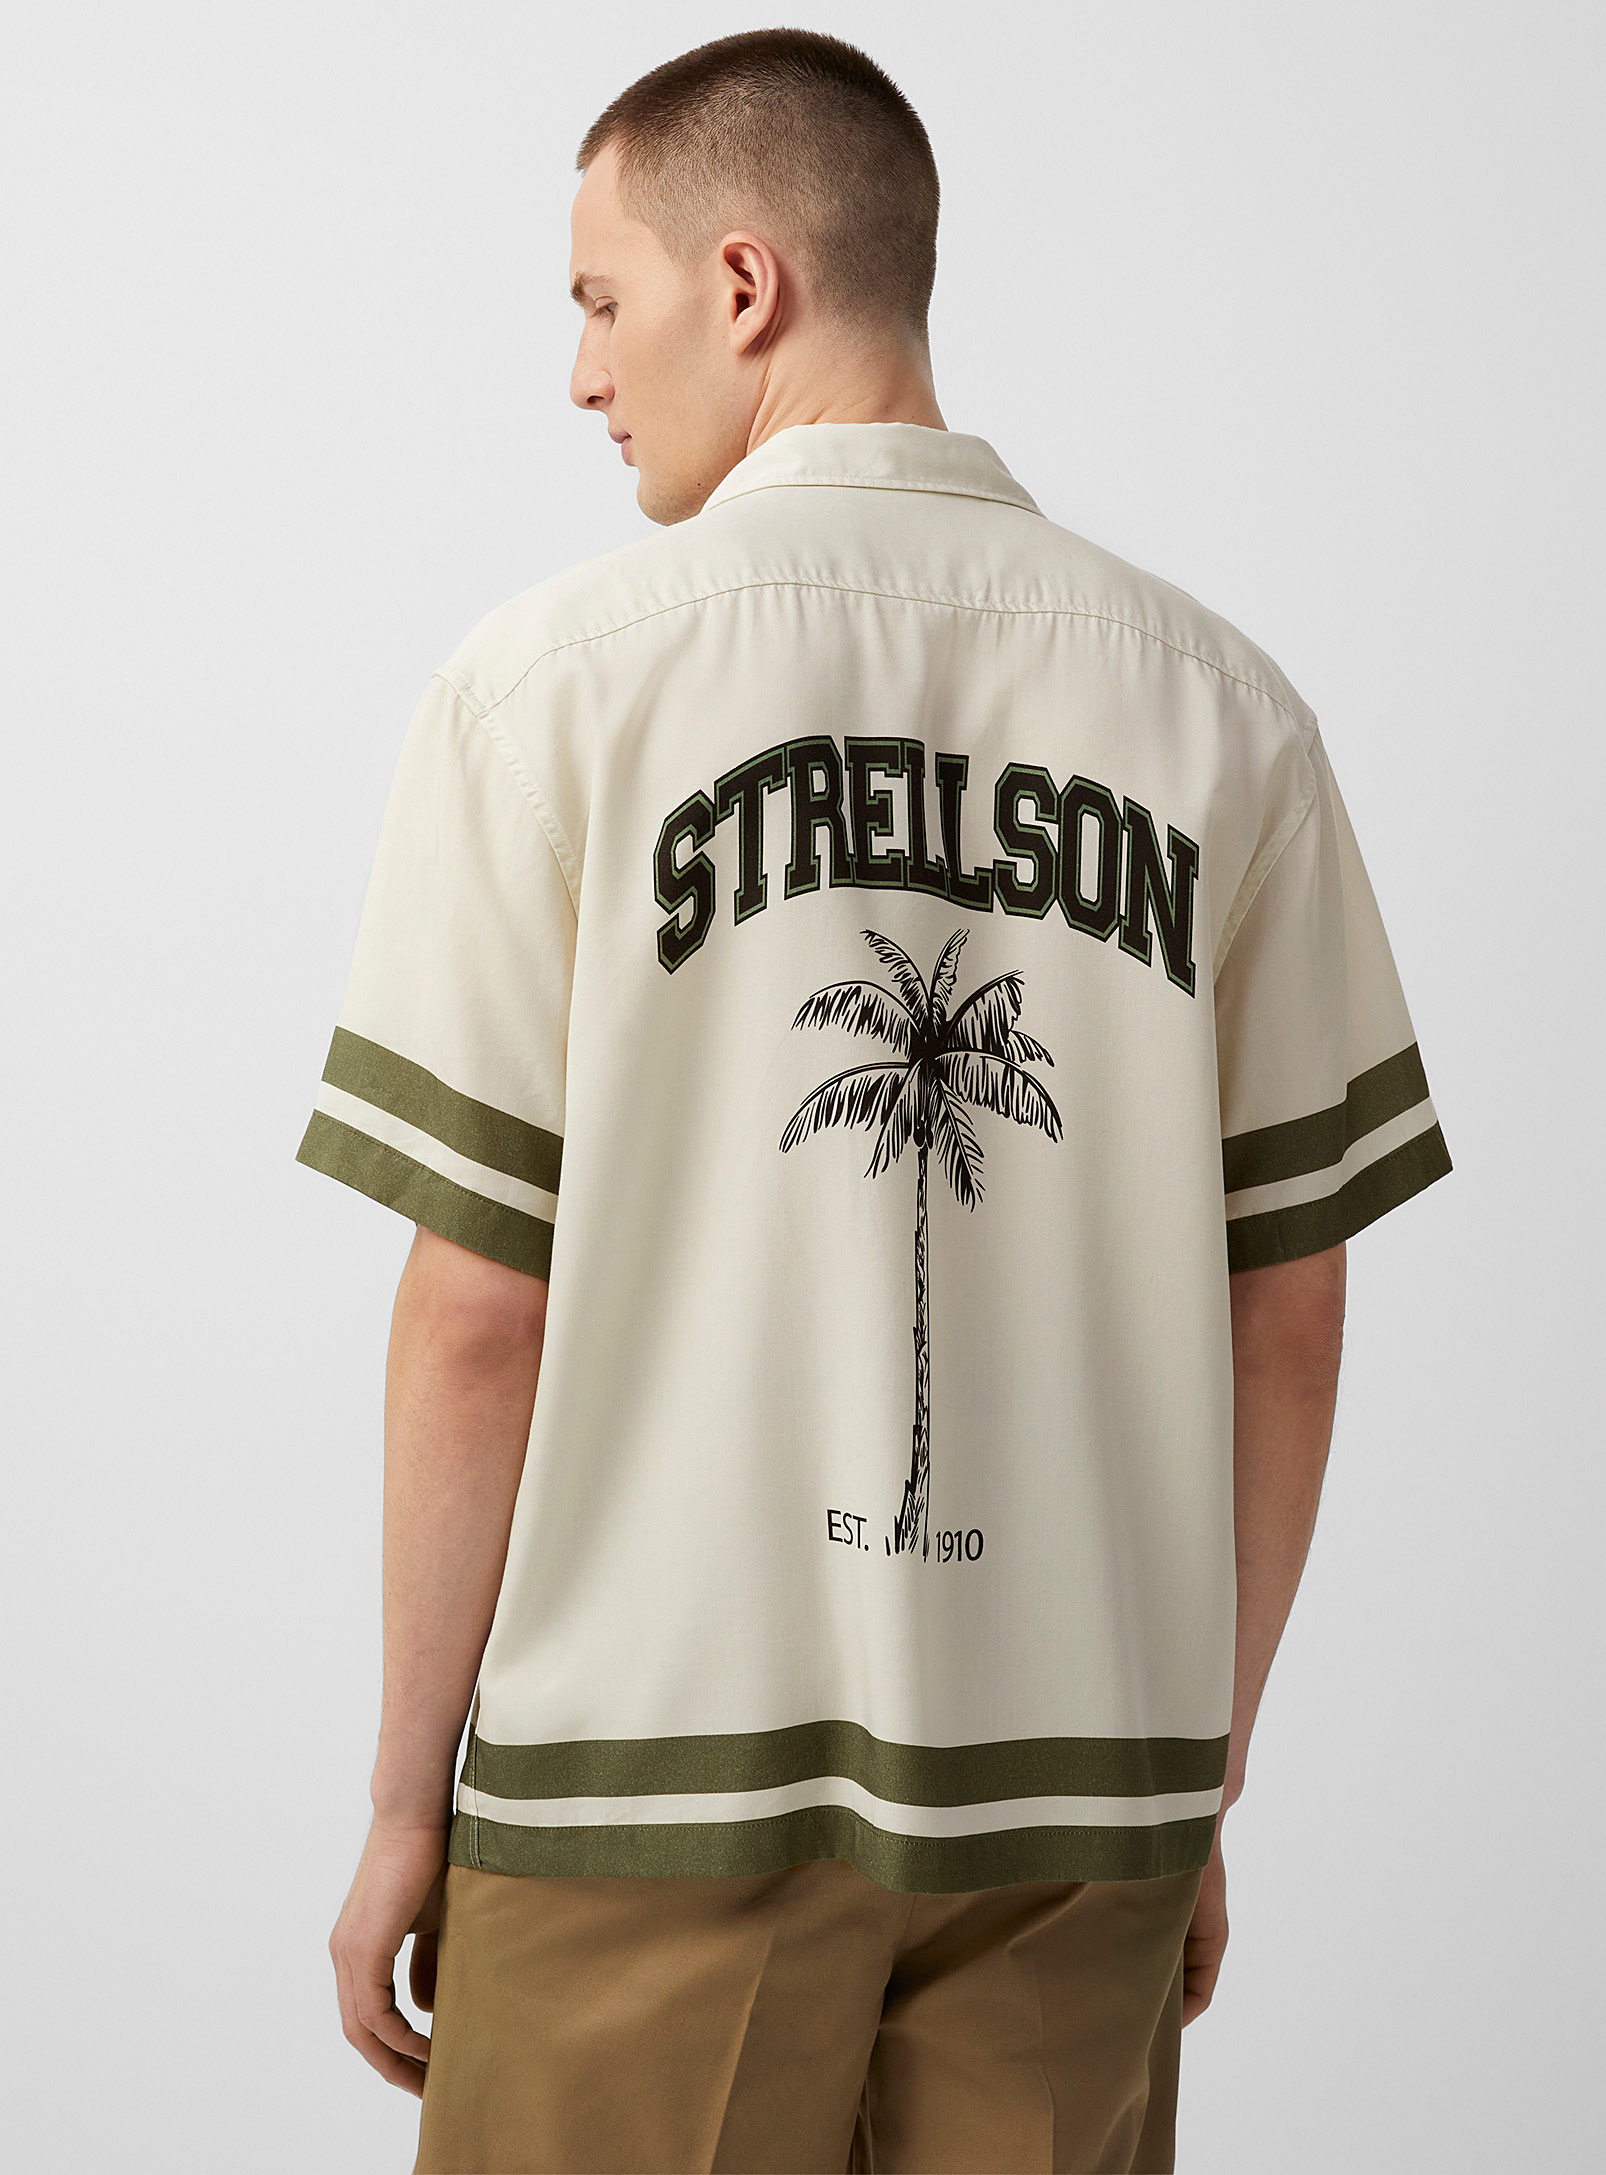 Strellson - La chemise cabana Palm Springs